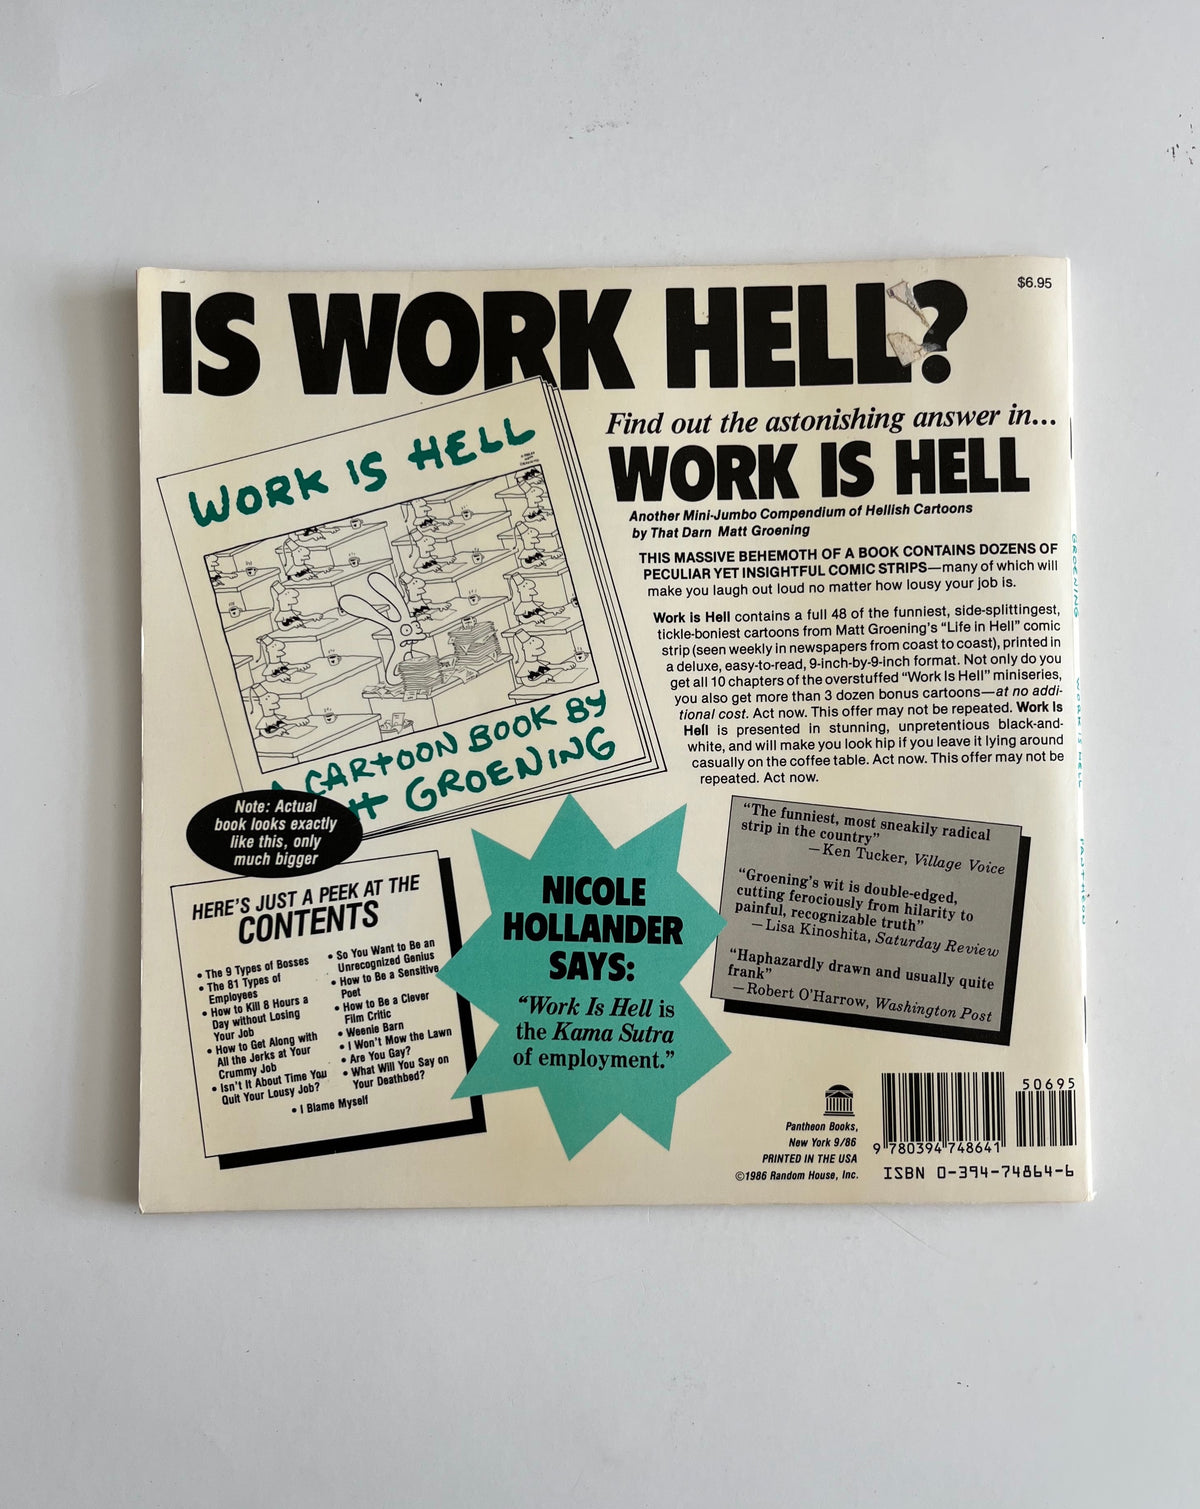 Work is Hell by Matt Groening